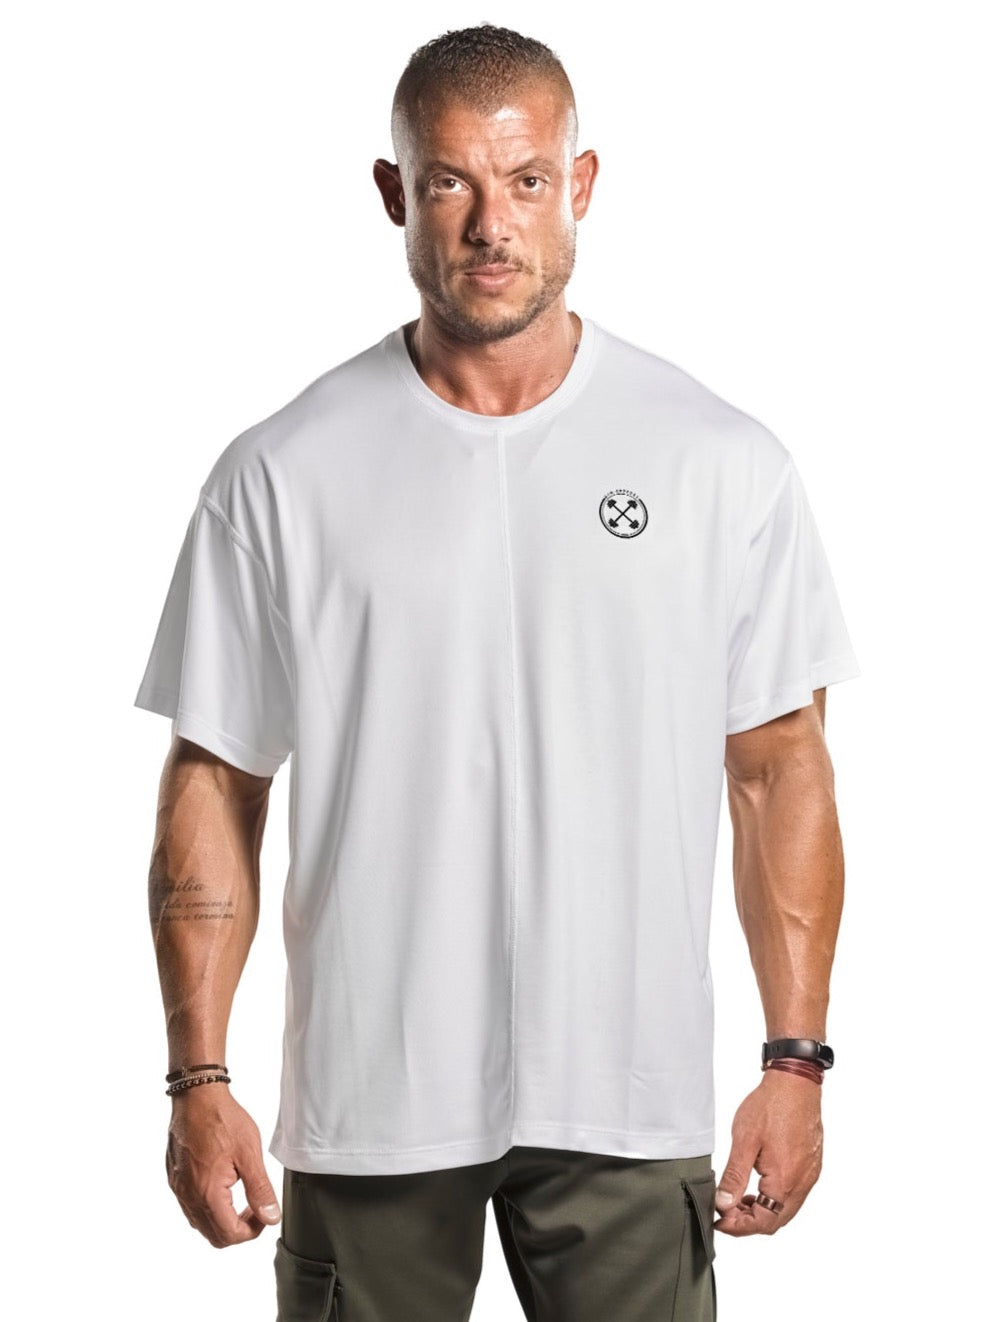 Oversized Bar-Basic T-Shirt [White] Limited Quantities - T-Shirt - Gym Apparel Egypt